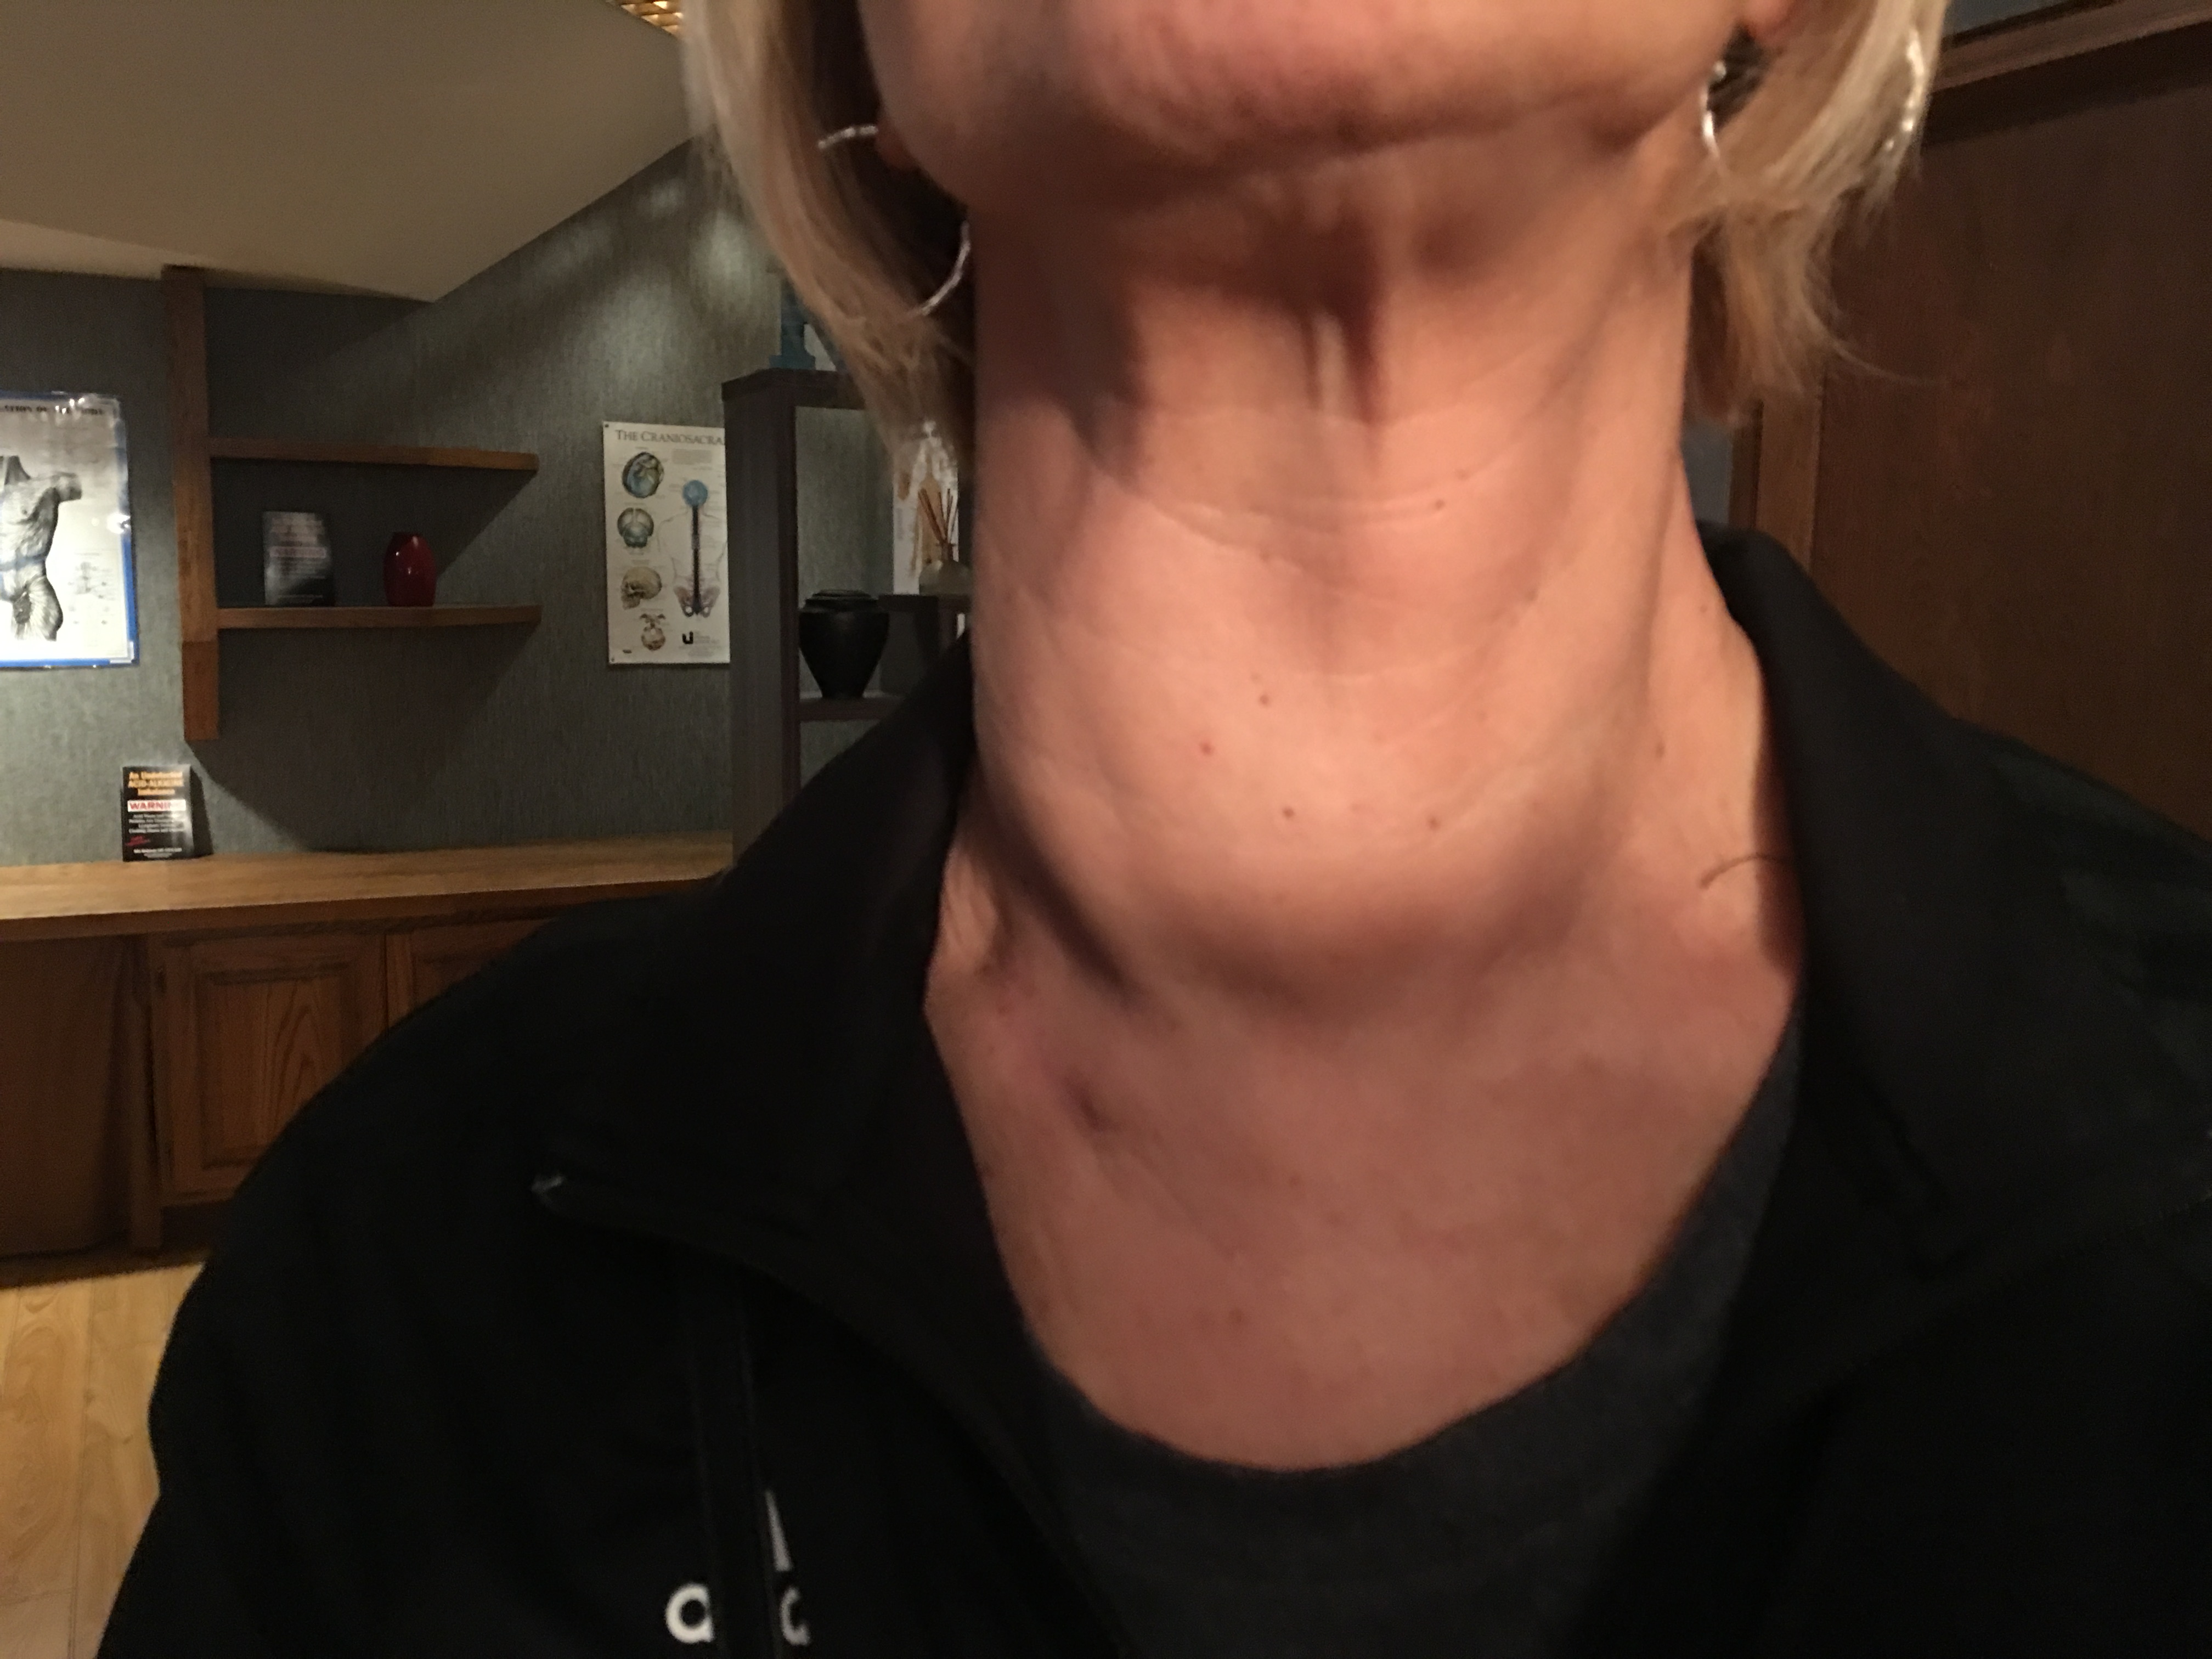 lymph nodes in back of neck swollen